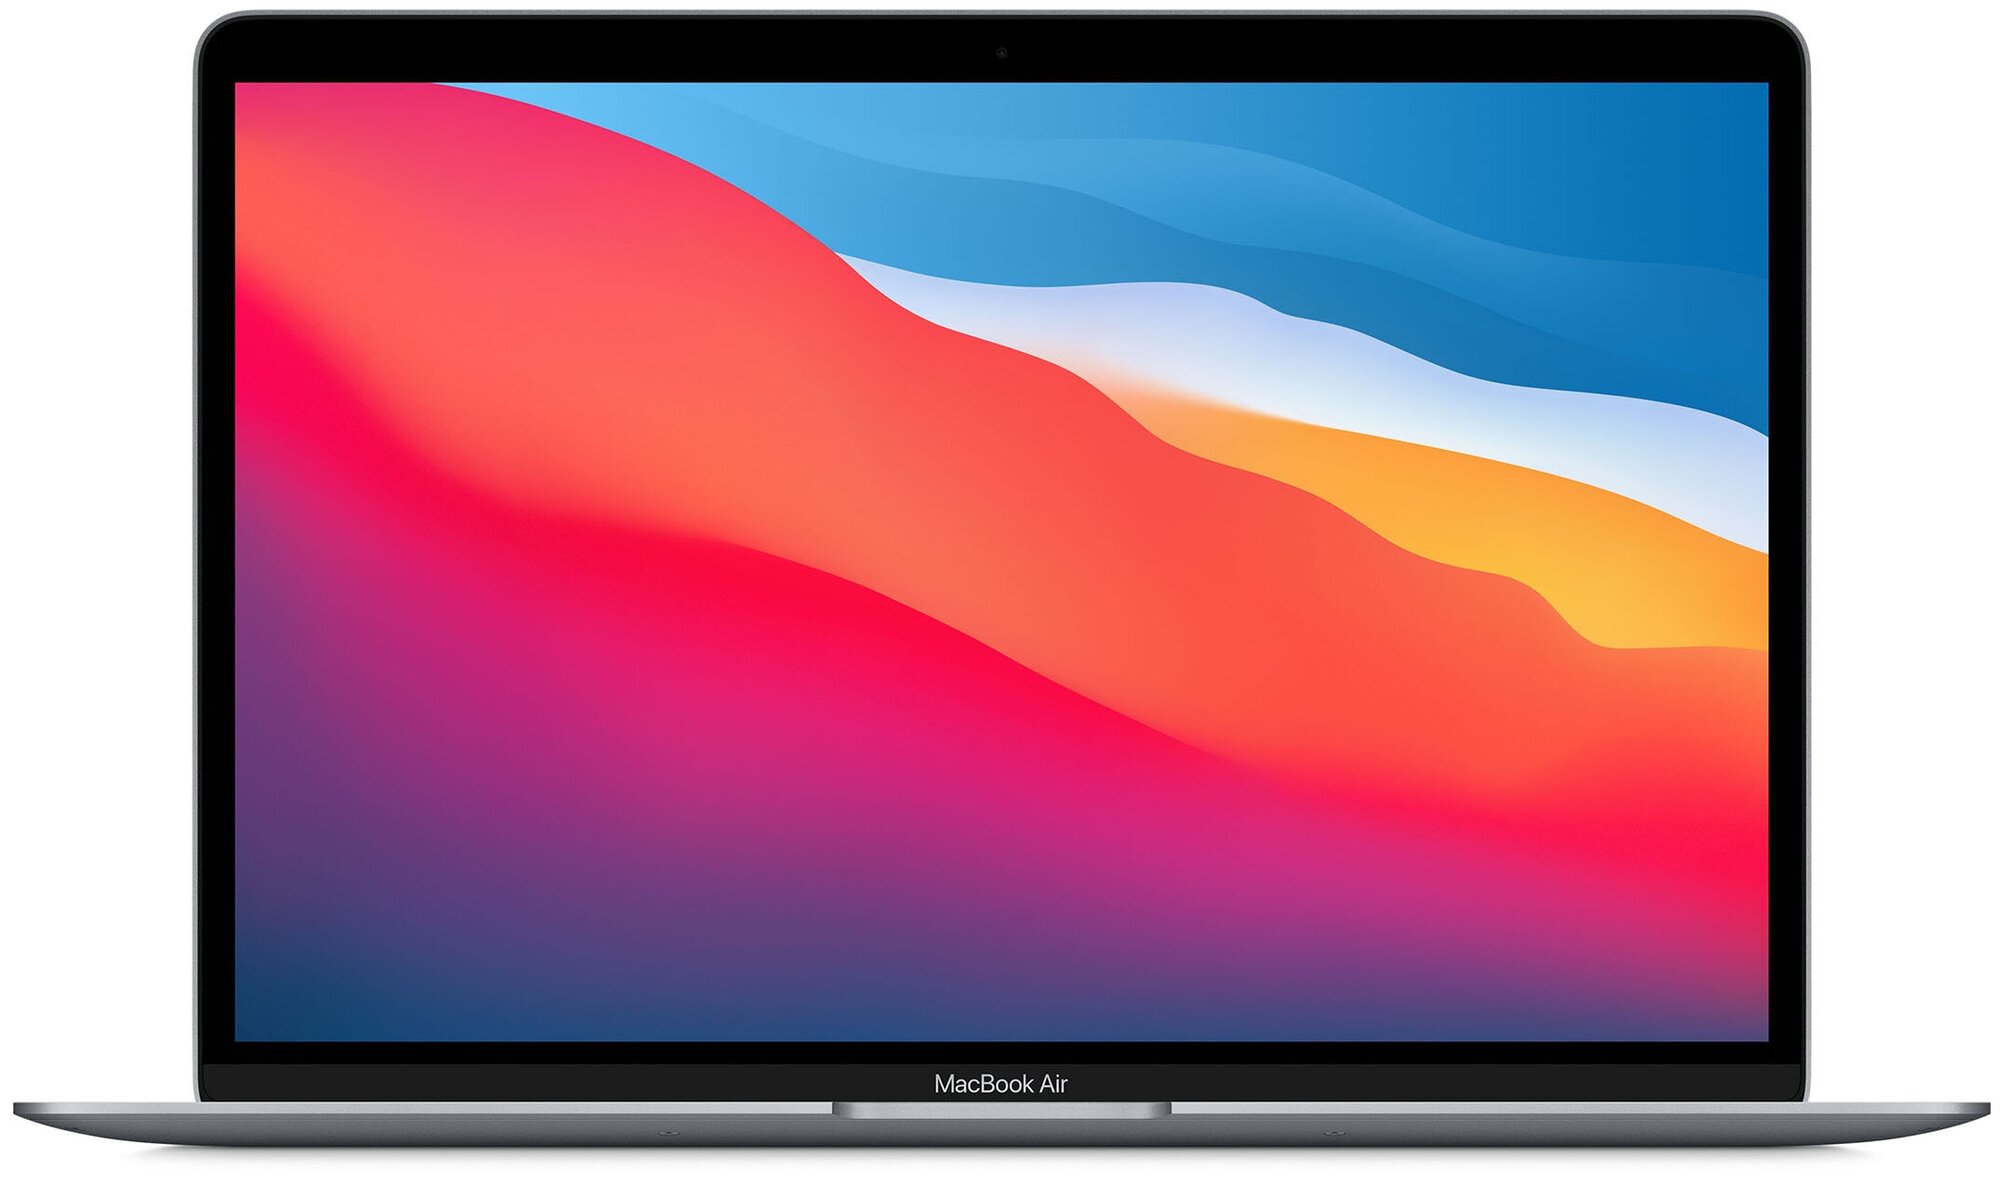 Ноутбук Apple MacBook Air M1/16Gb/SSD512Gb/Apple Graphics 8-core/13.3/IPS (2560x1600)/Mac OS/gold/WiFi/BT/Cam